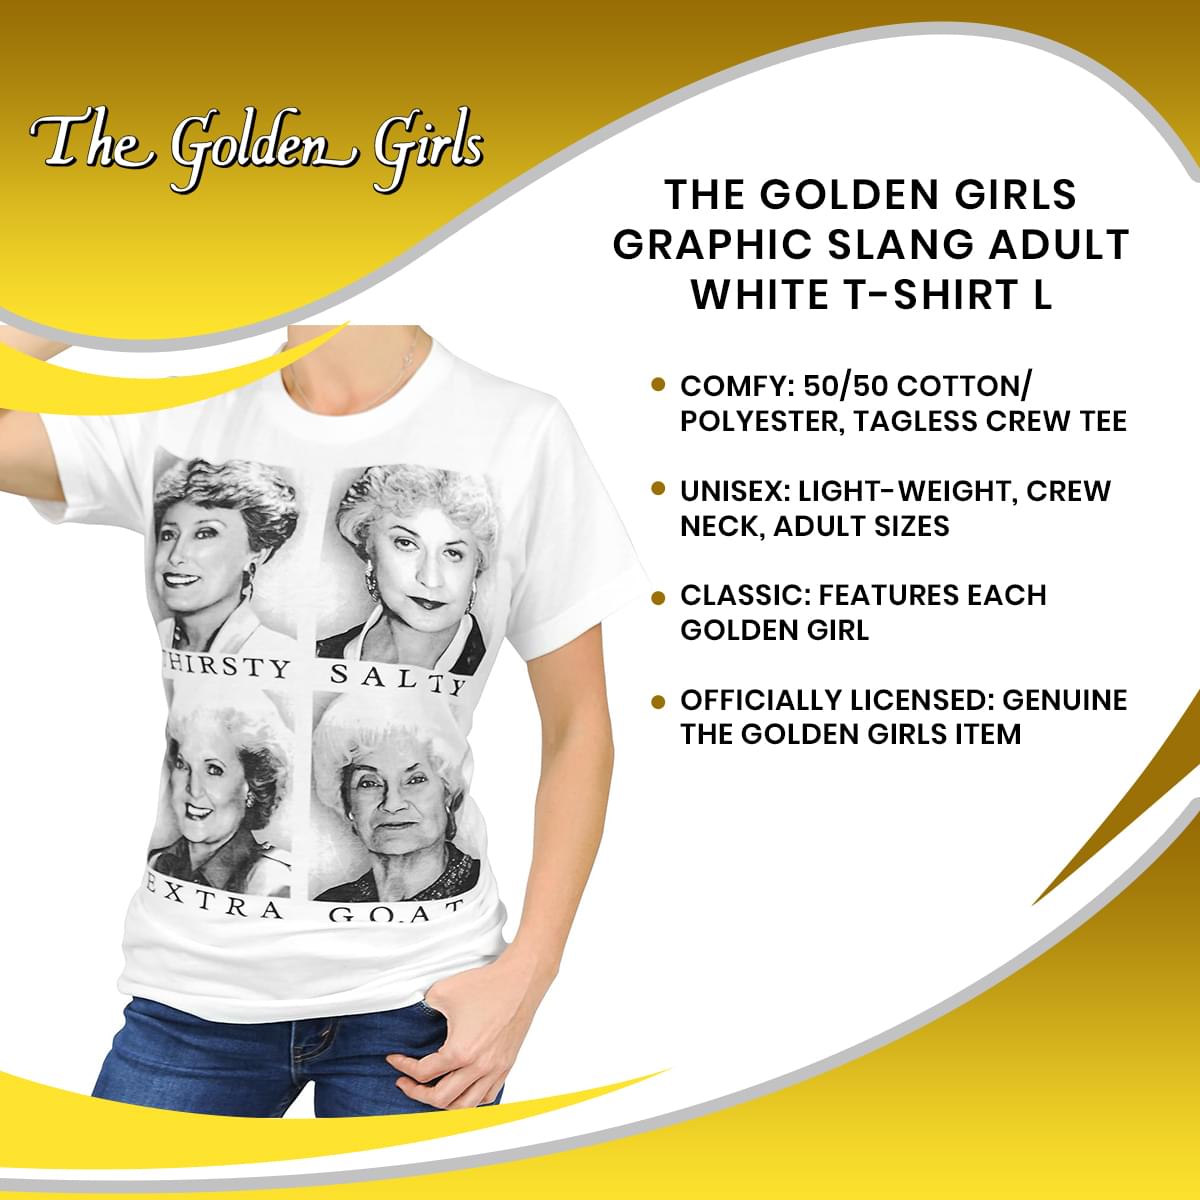 The Golden Girls Graphic Slang Adult White T-Shirt